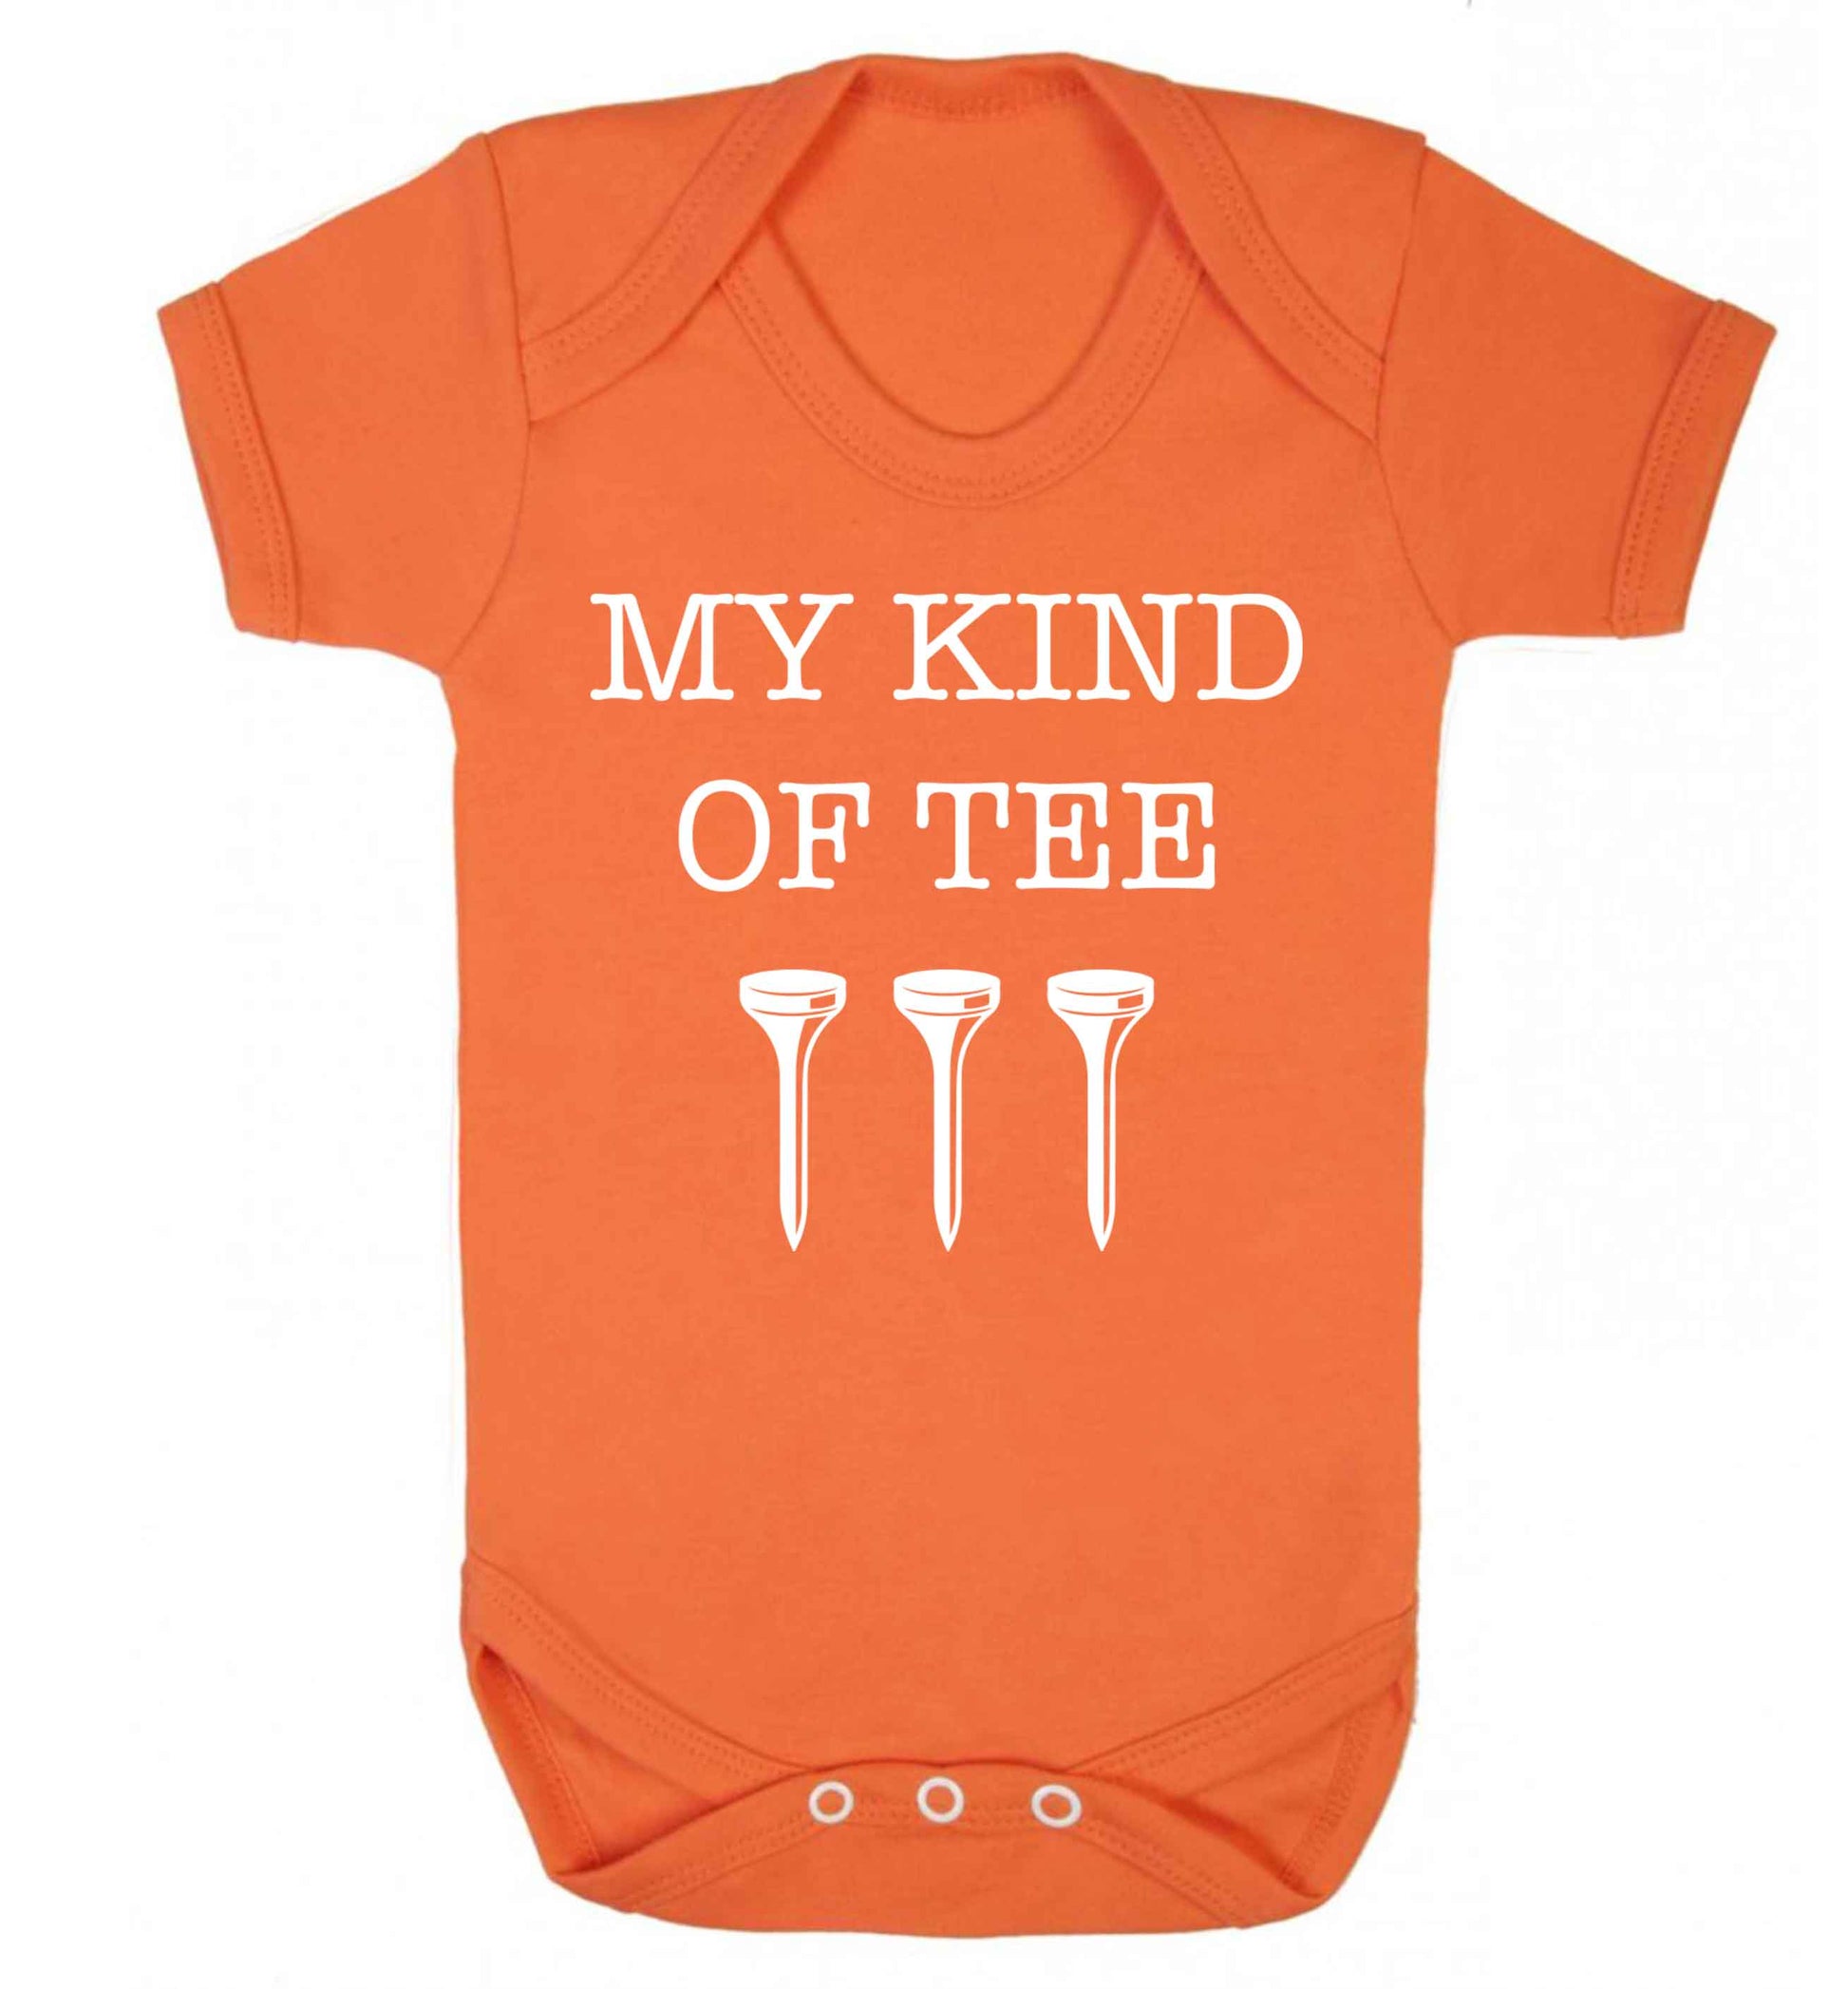 My kind of tee Baby Vest orange 18-24 months